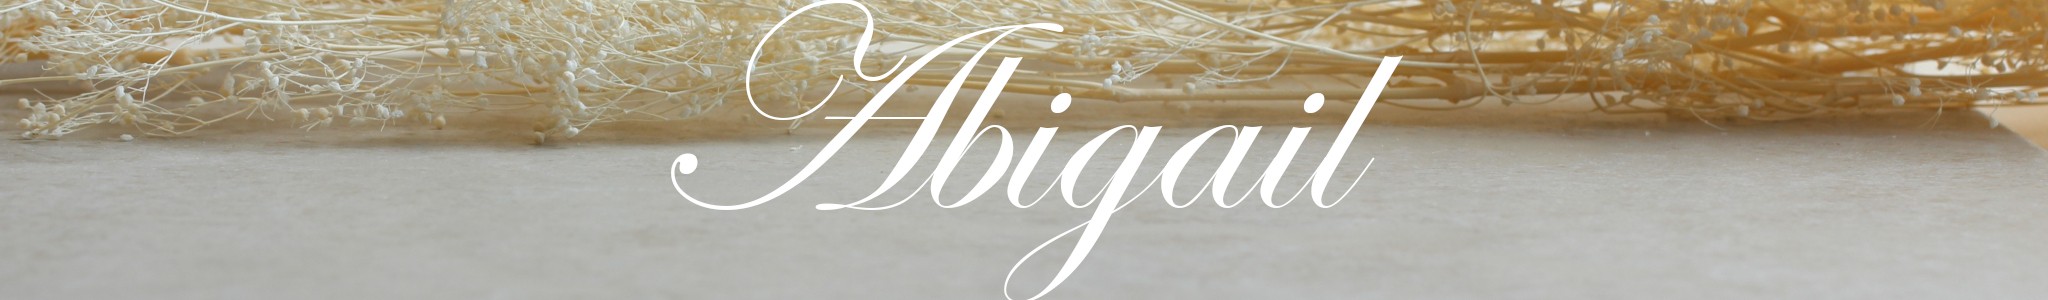 Abigail Product Line Image